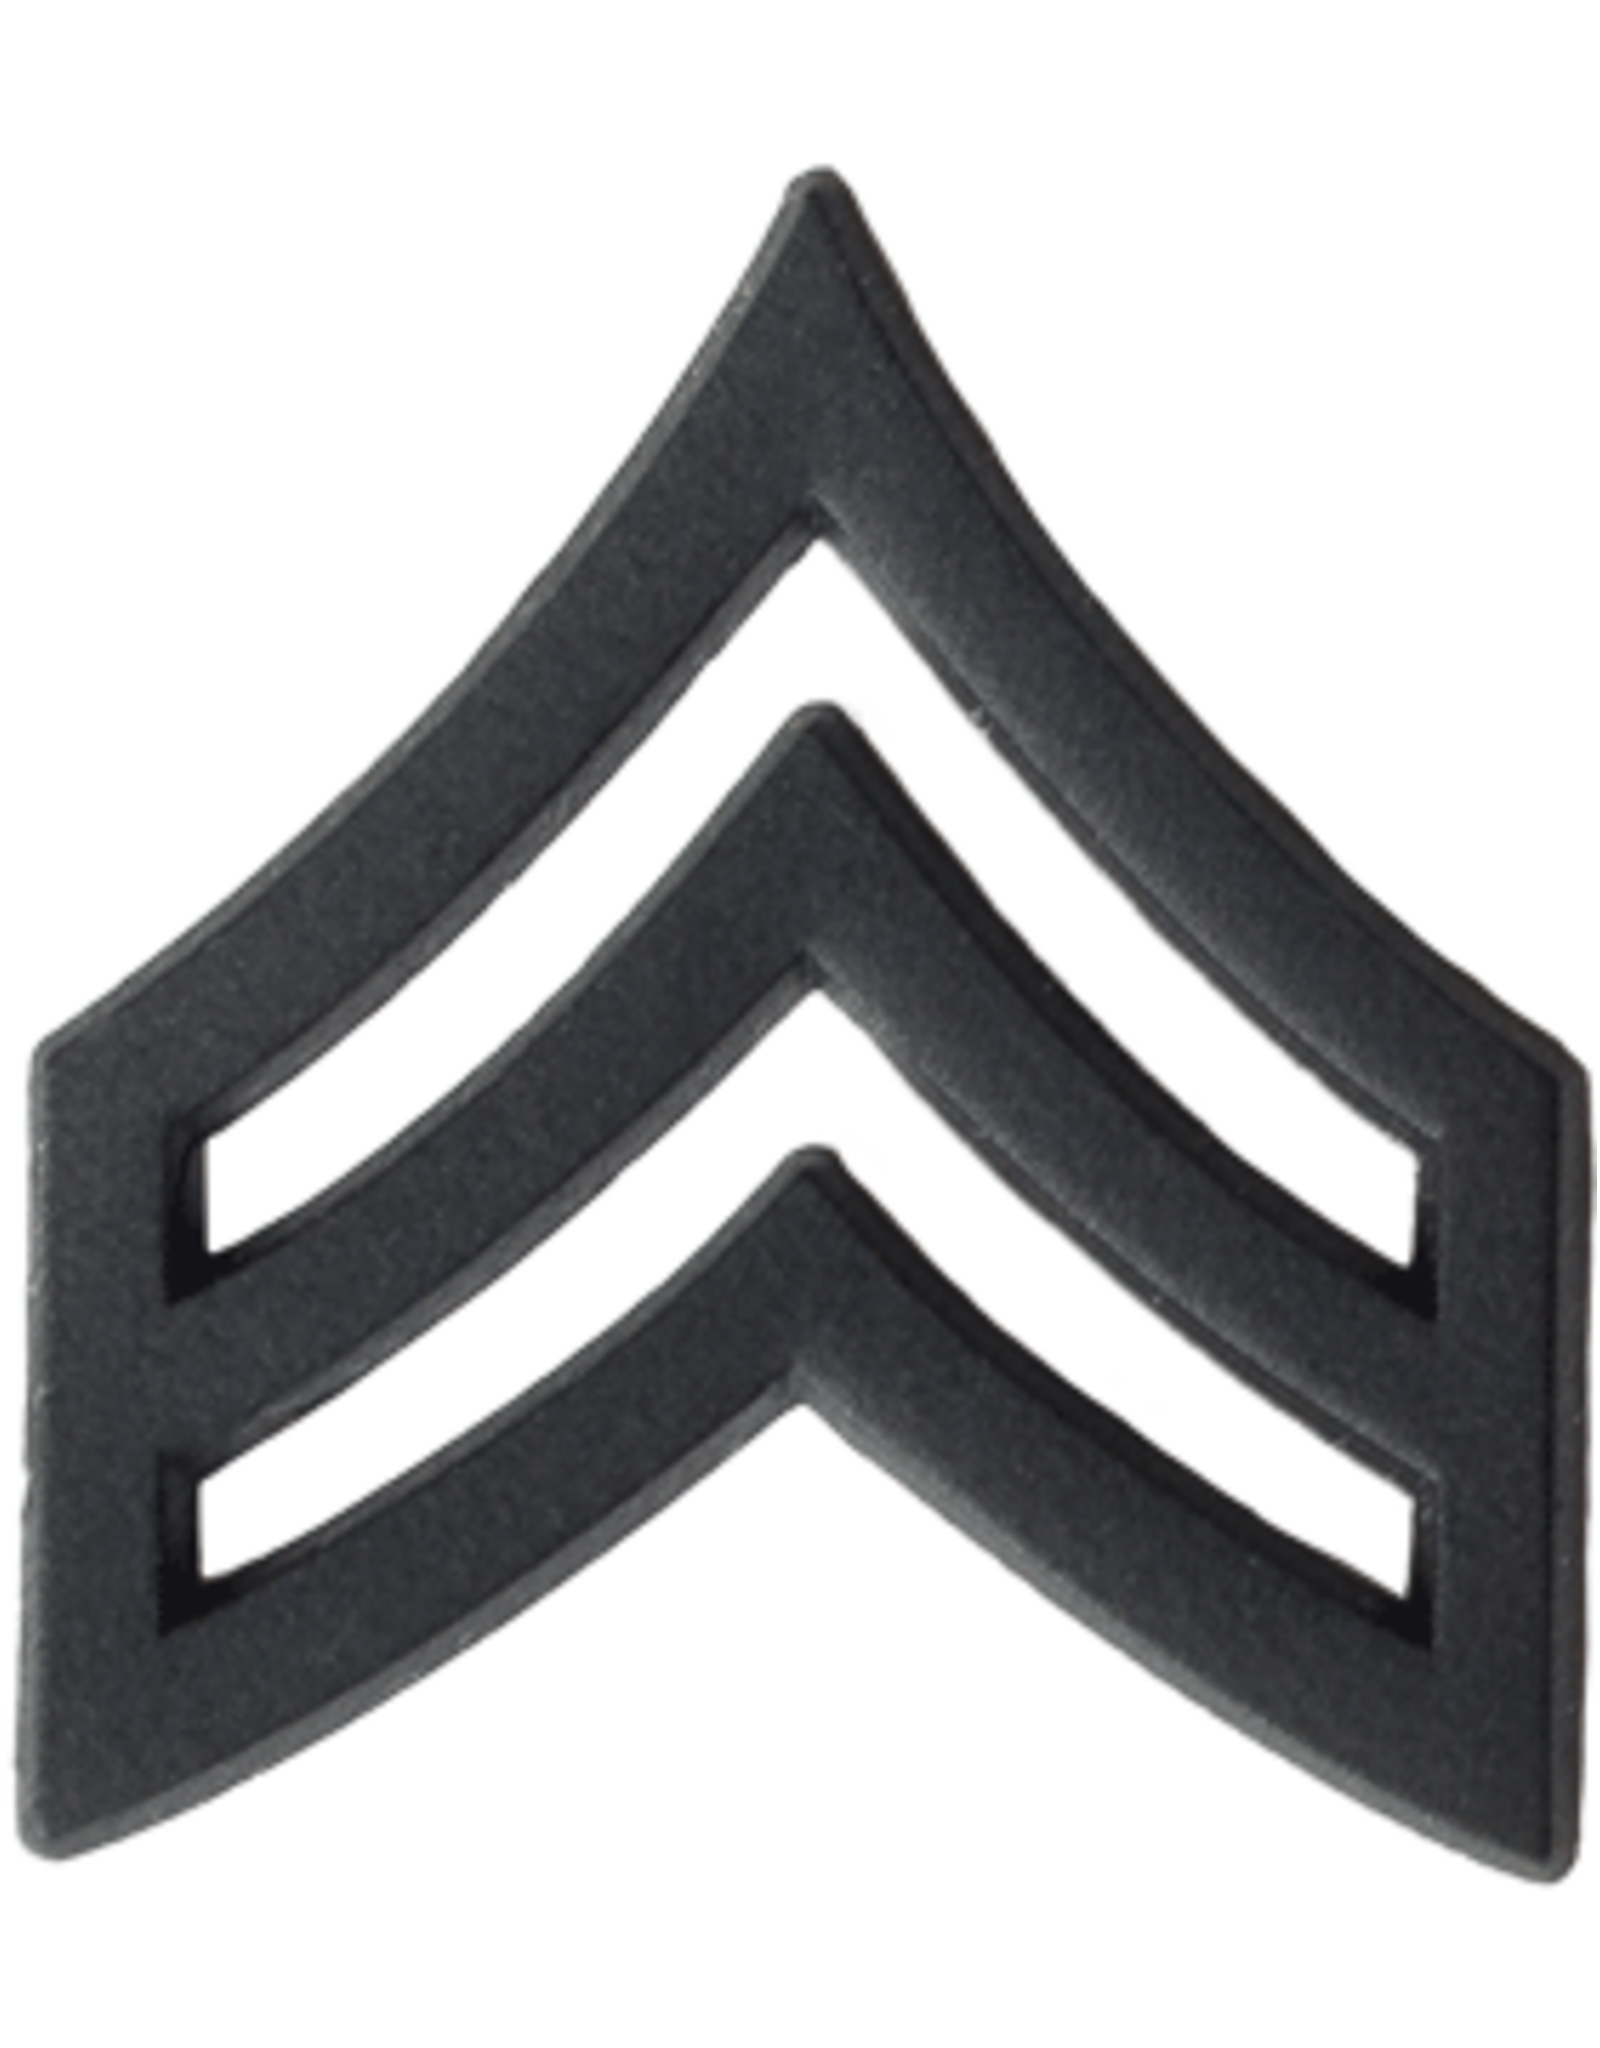 army ranks sergeant